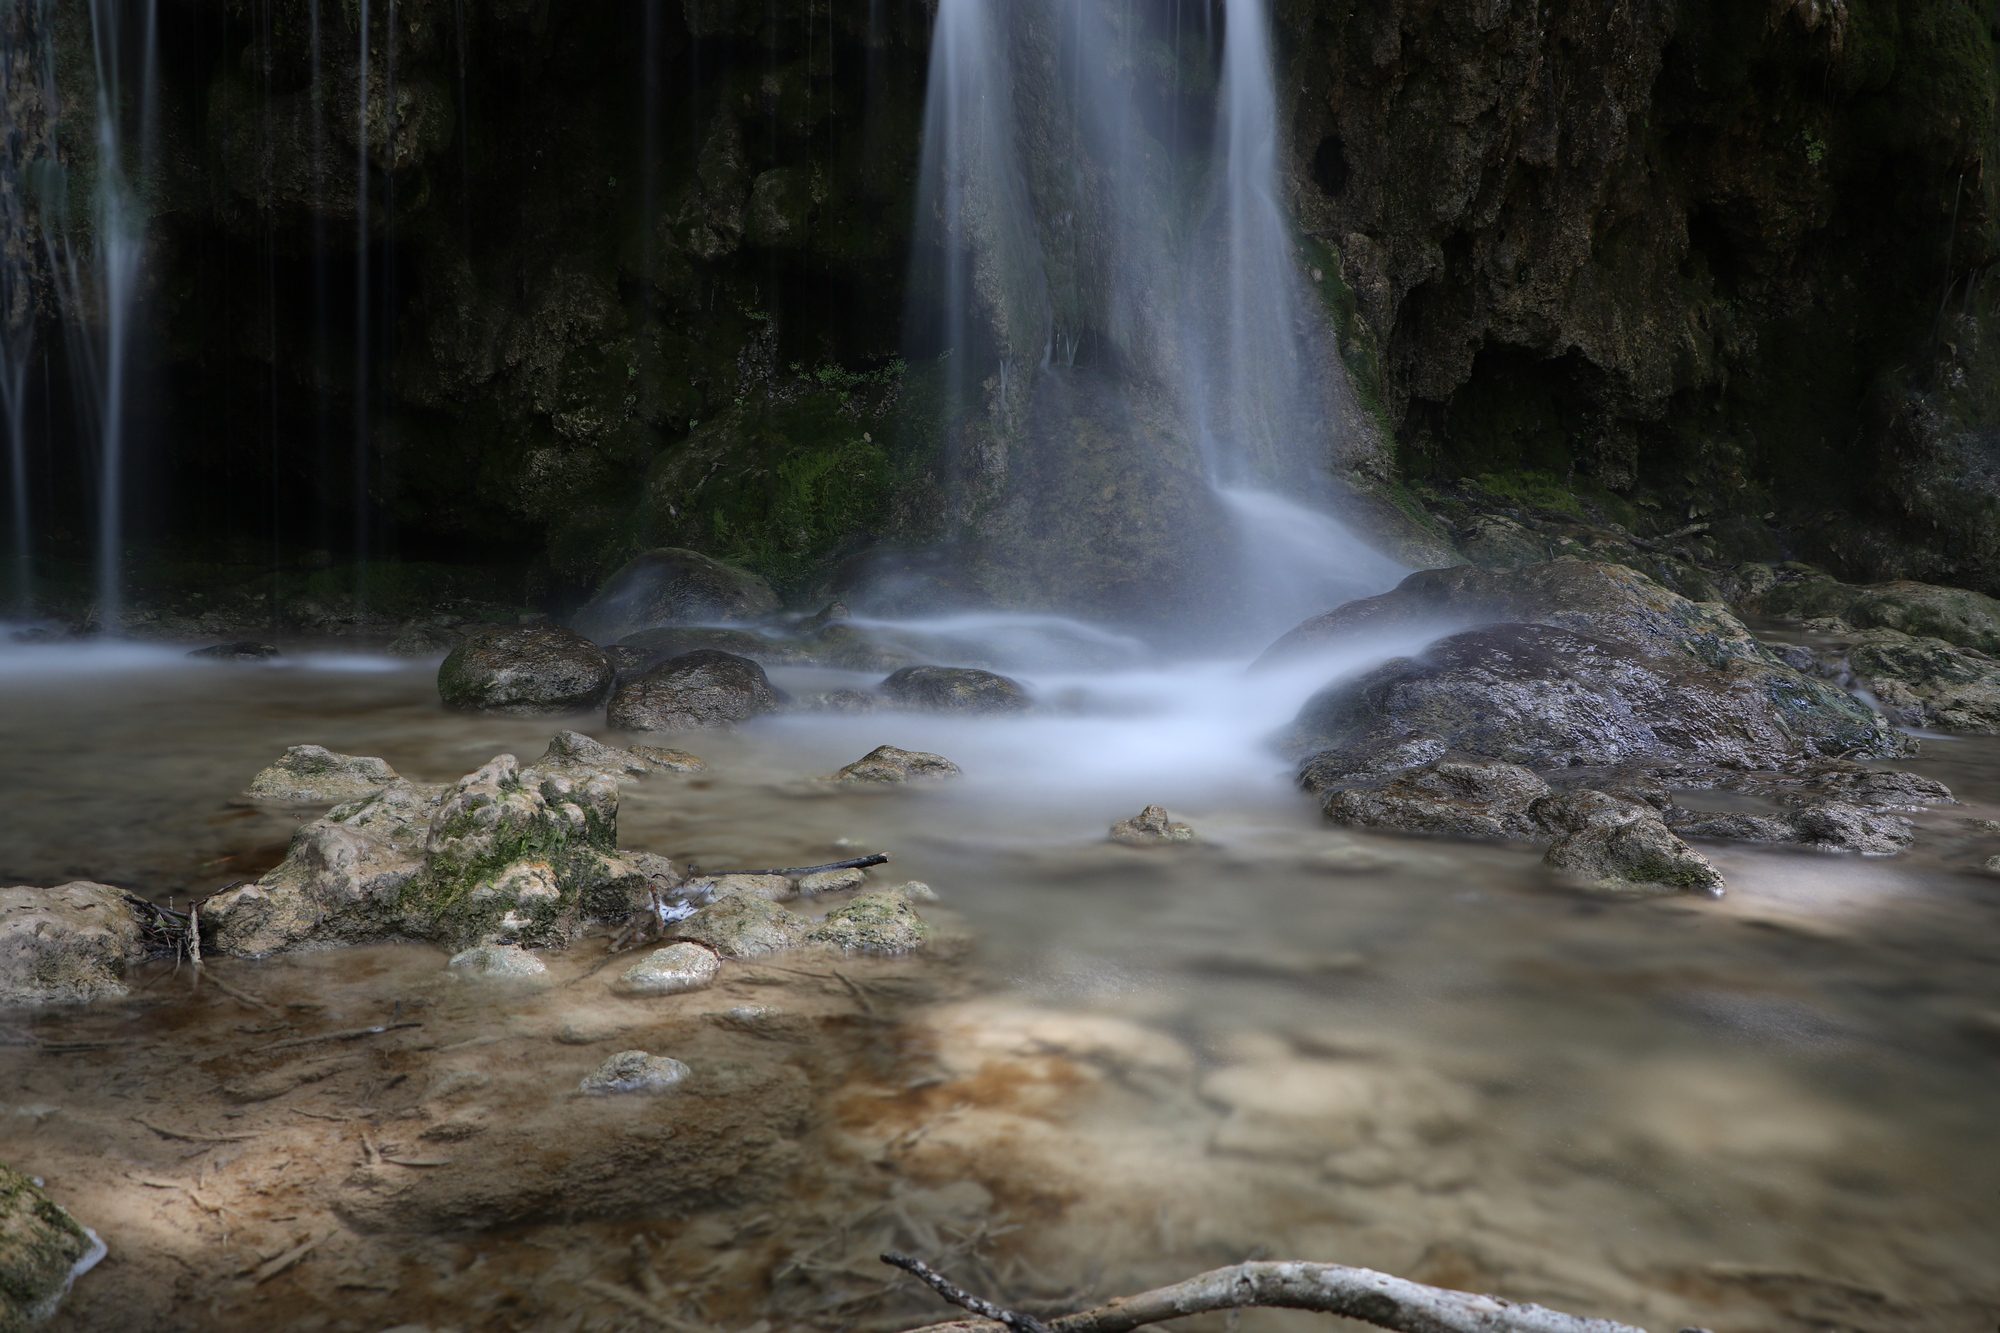 Wasserfall im Krka-Nationalpark